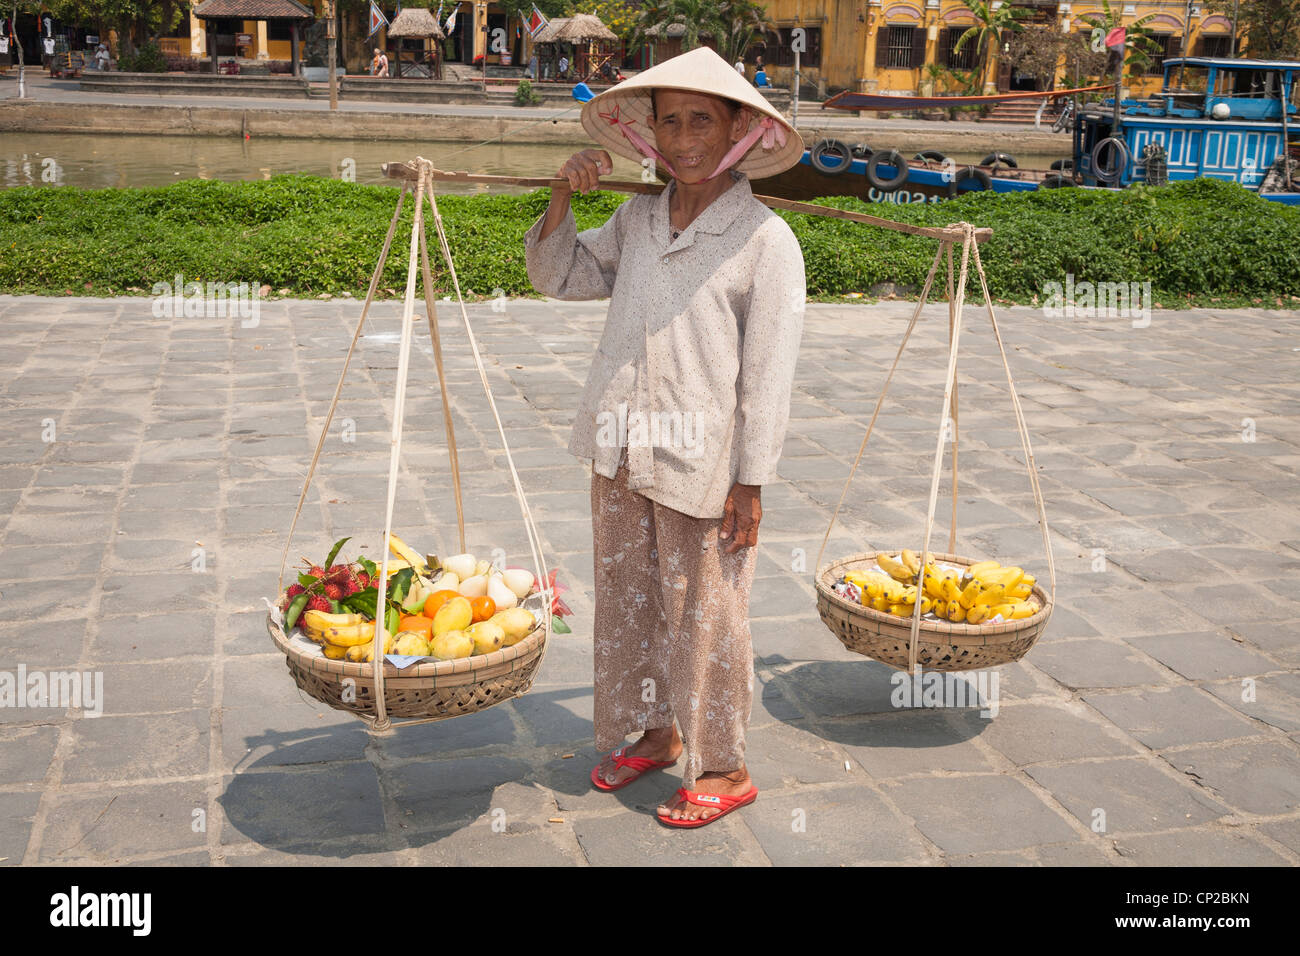 A Vietnamese woman, carrying baskets of fruit, Hoi An, Quang Nam province, Vietnam Stock Photo